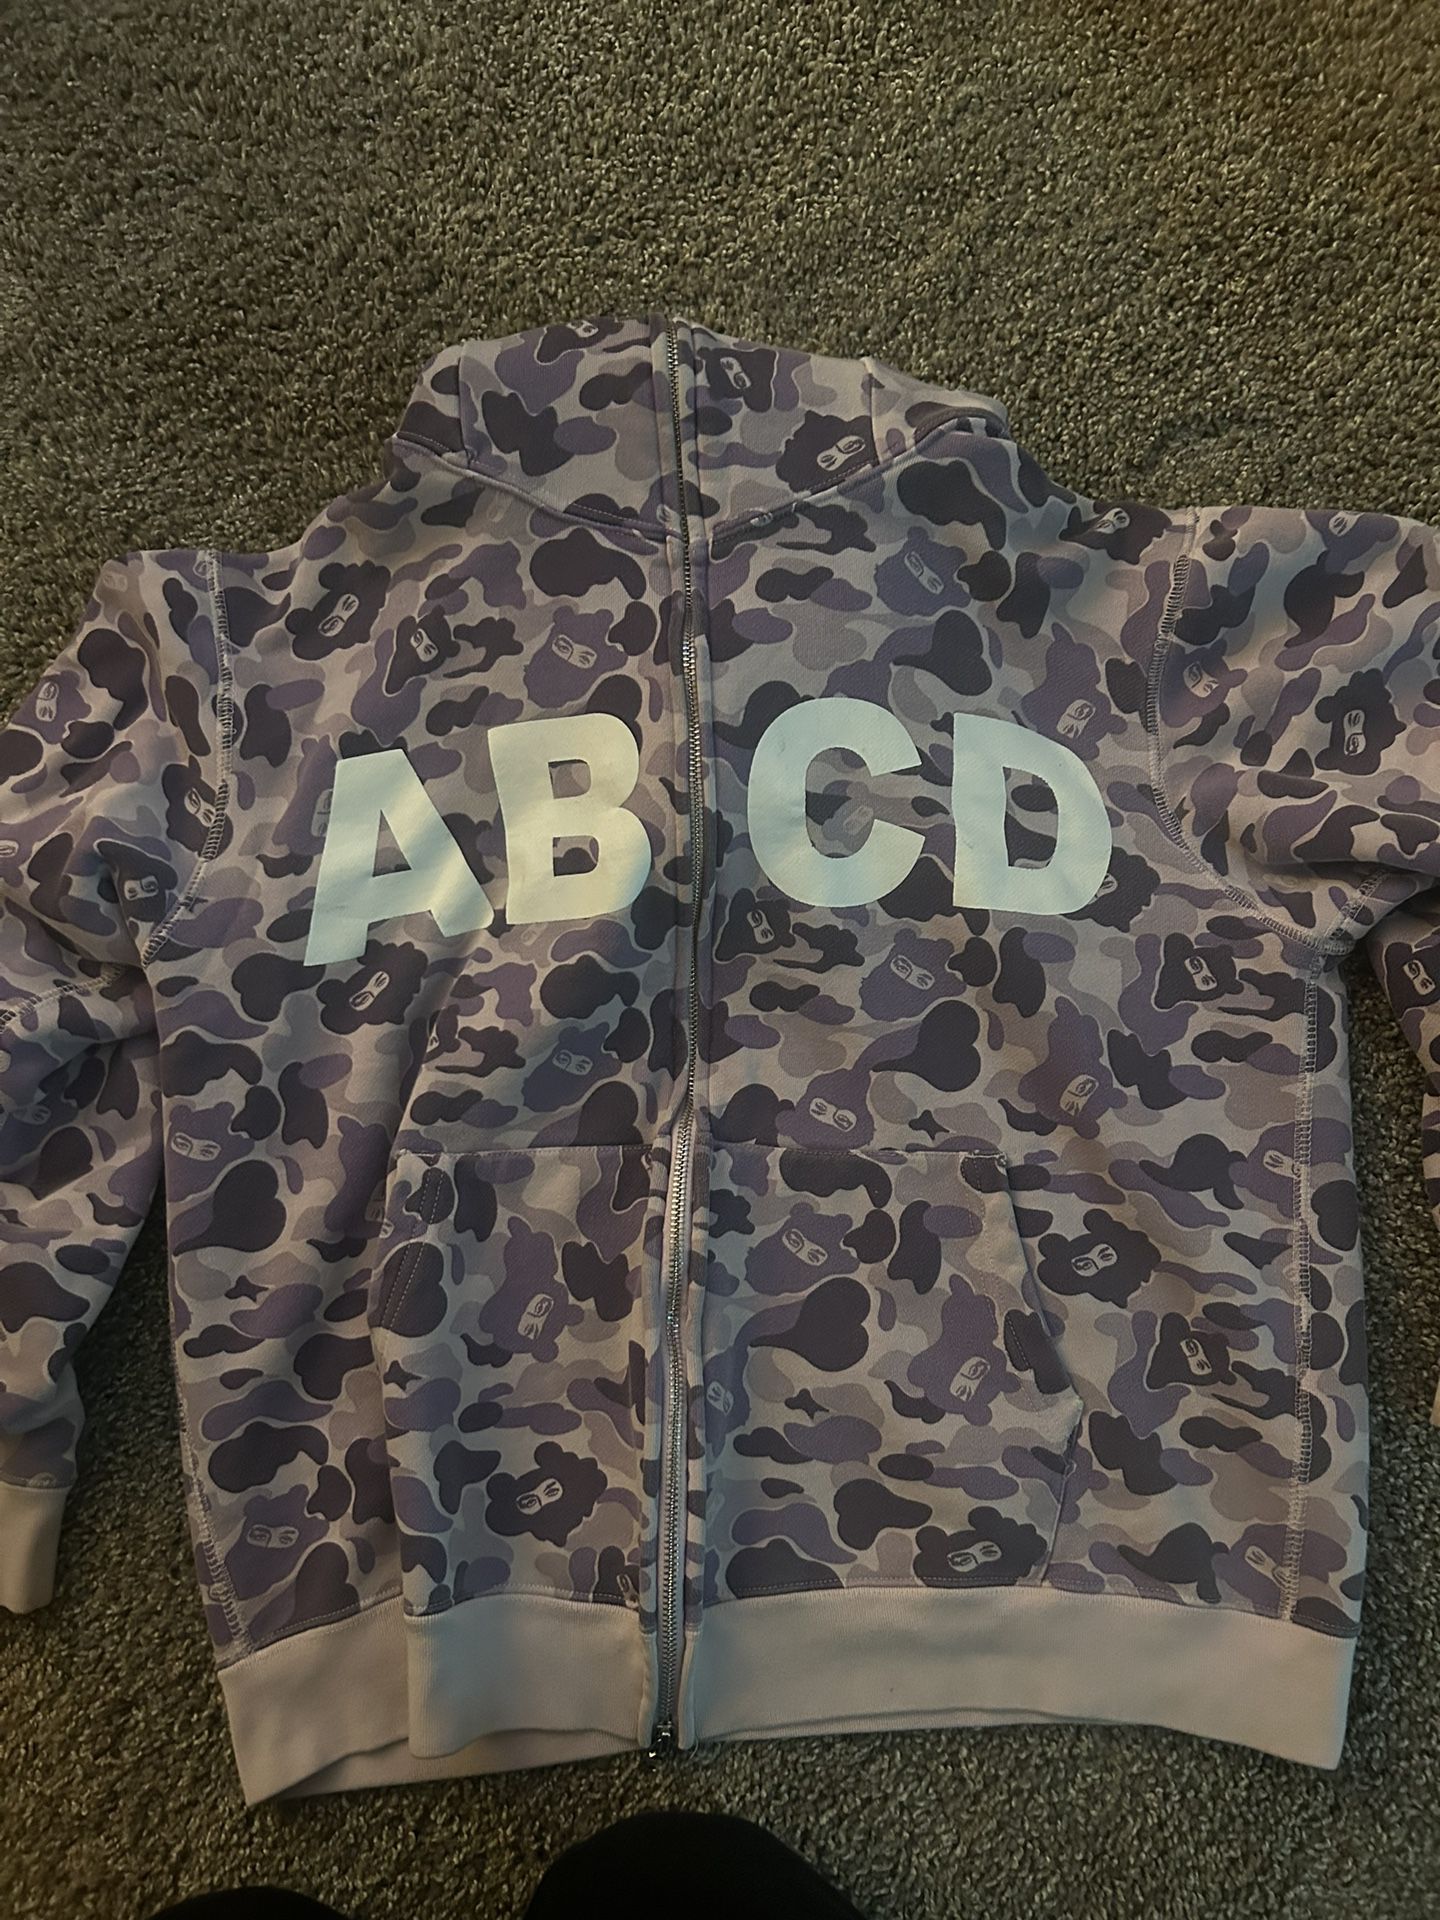 Jose wong “abcd” hoodie (bape collab)